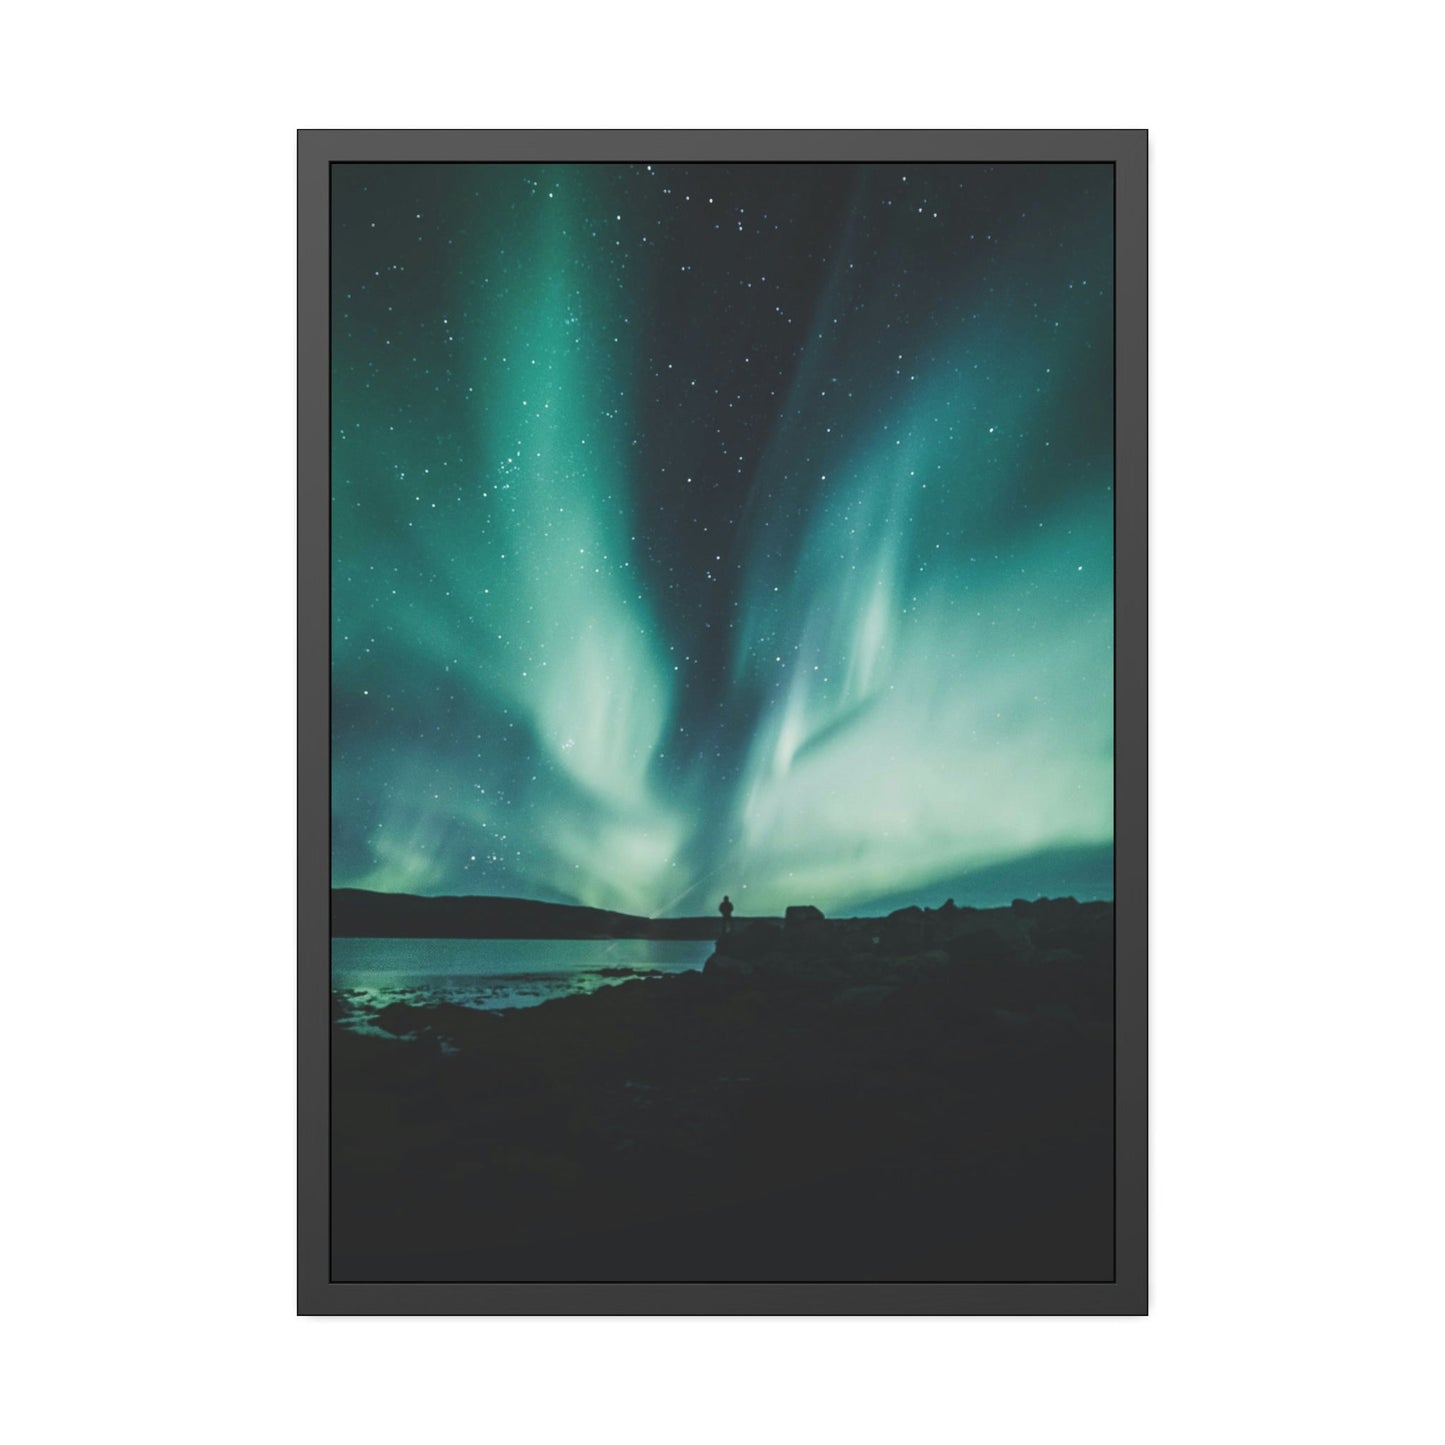 The Aurora Borealis Wonder: A Captivating Vision of the Sky